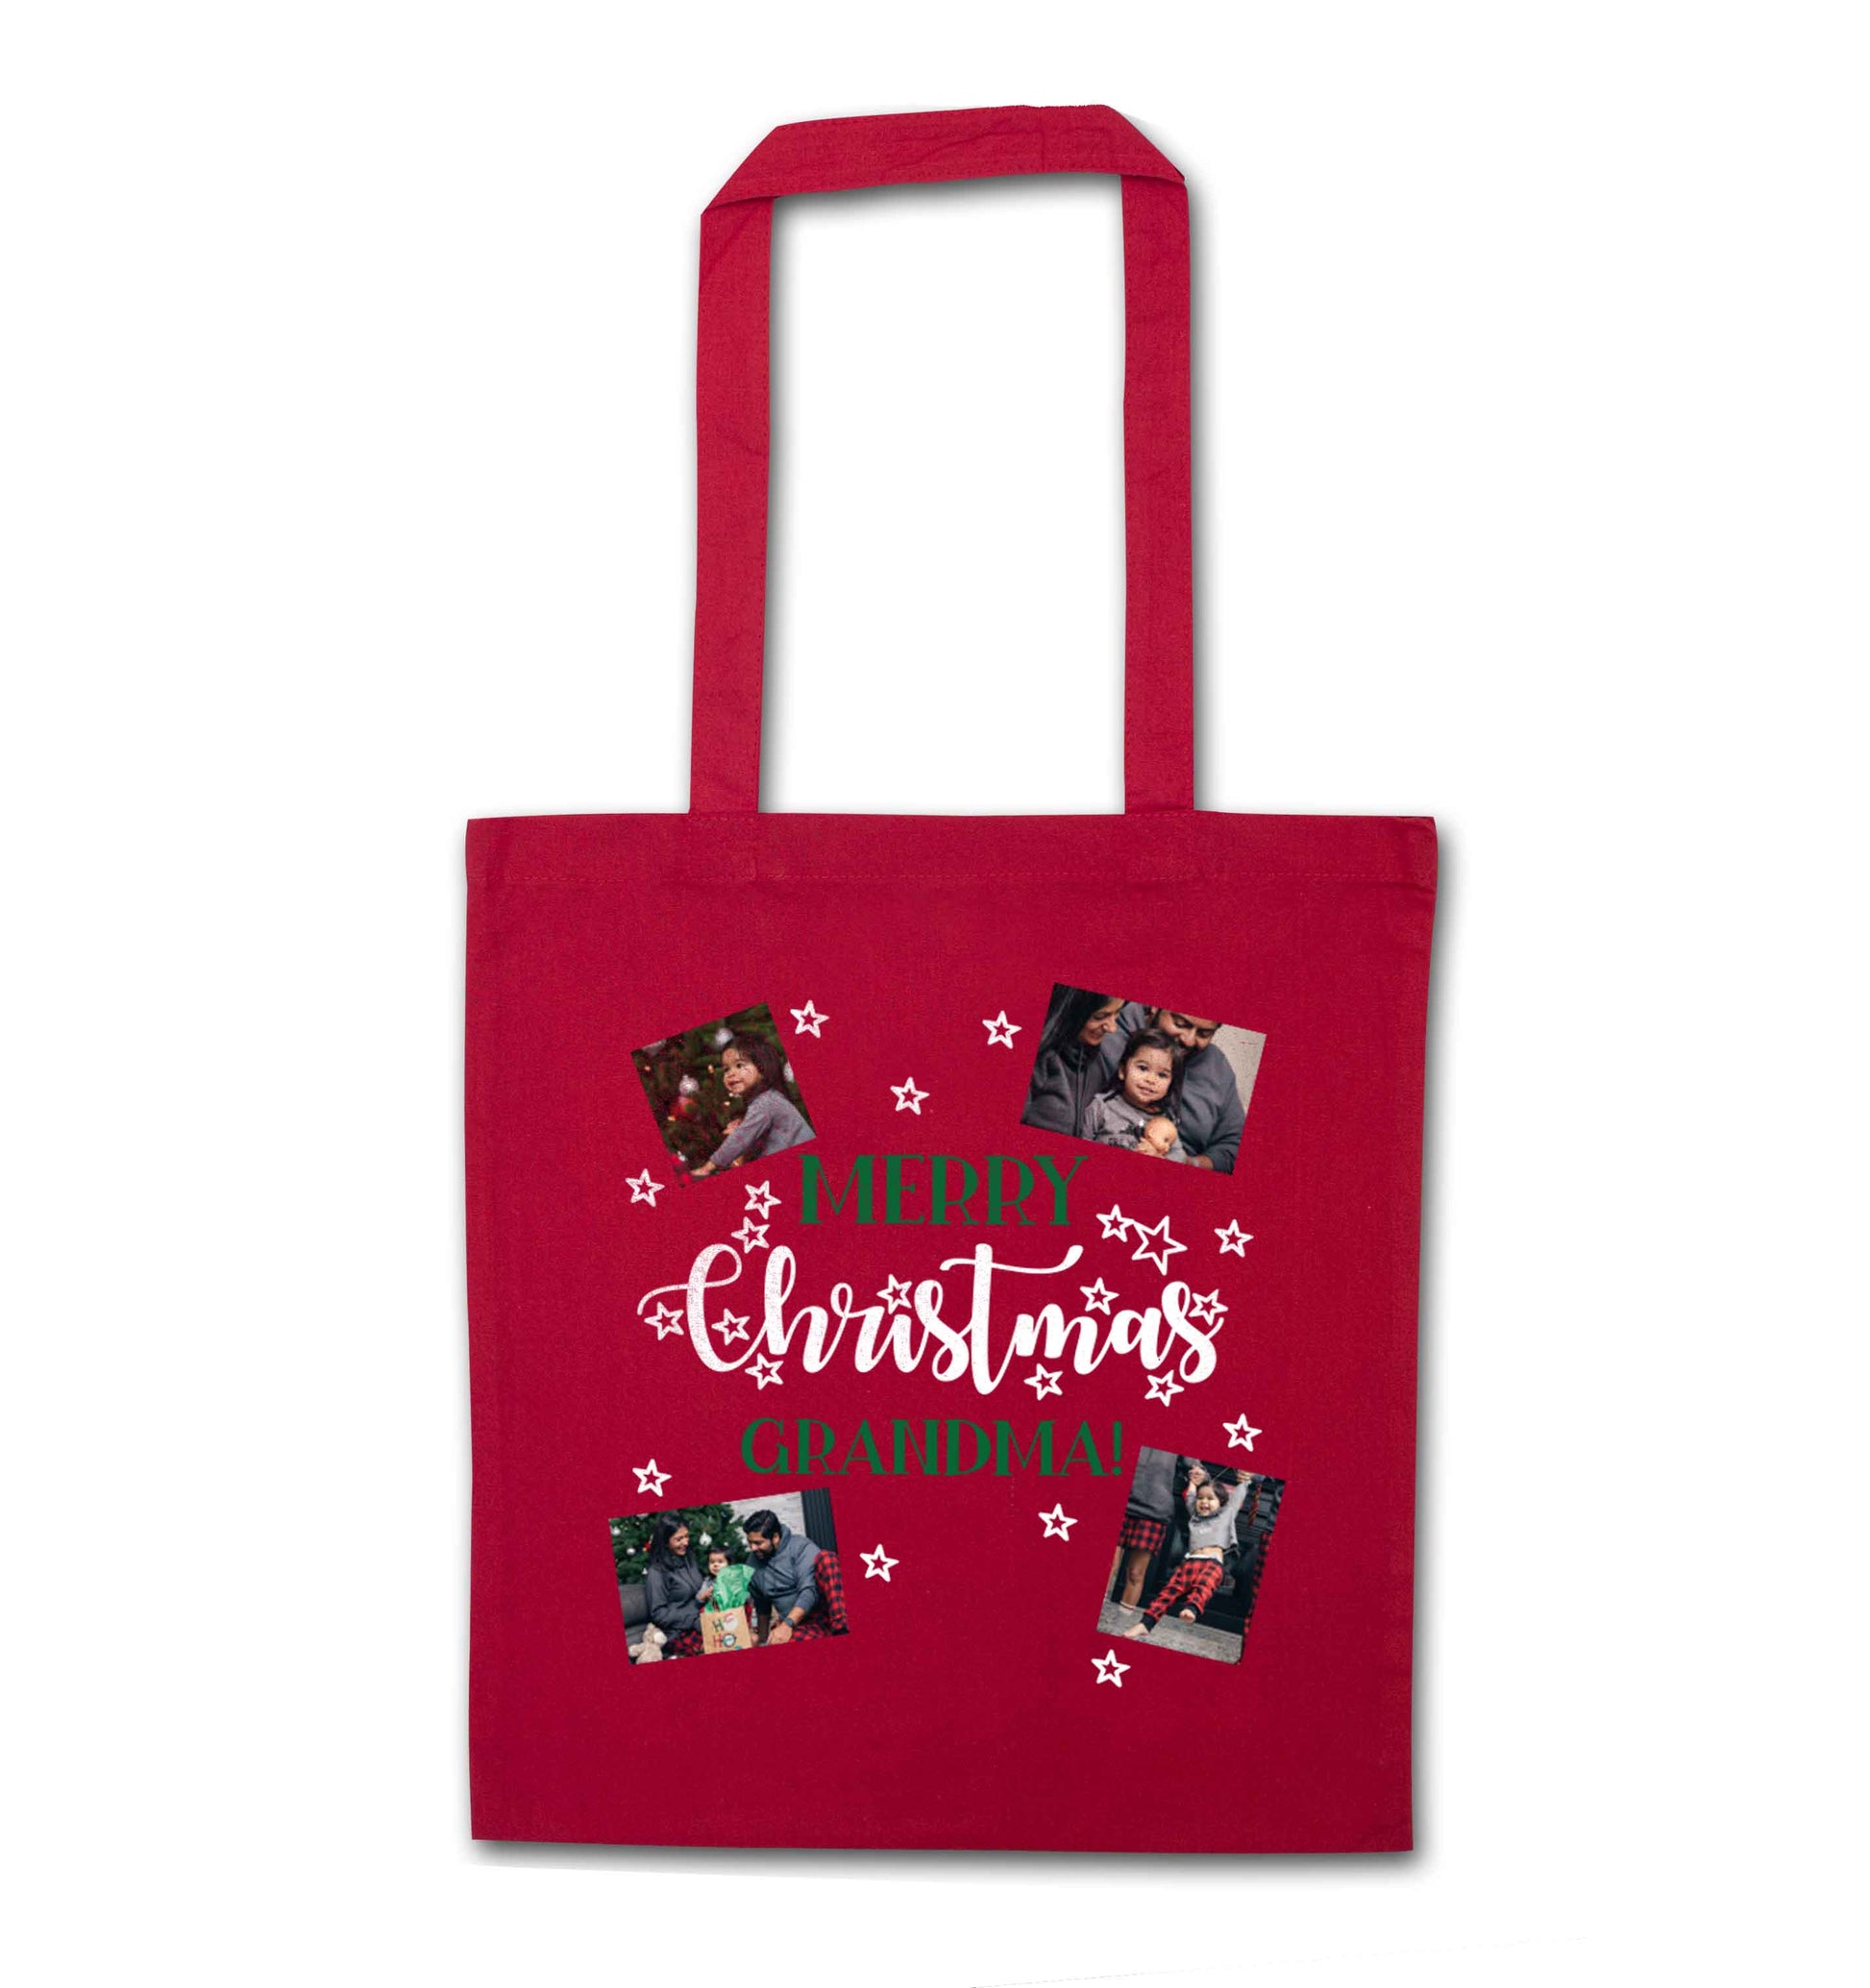 Merry Christmas grandma red tote bag